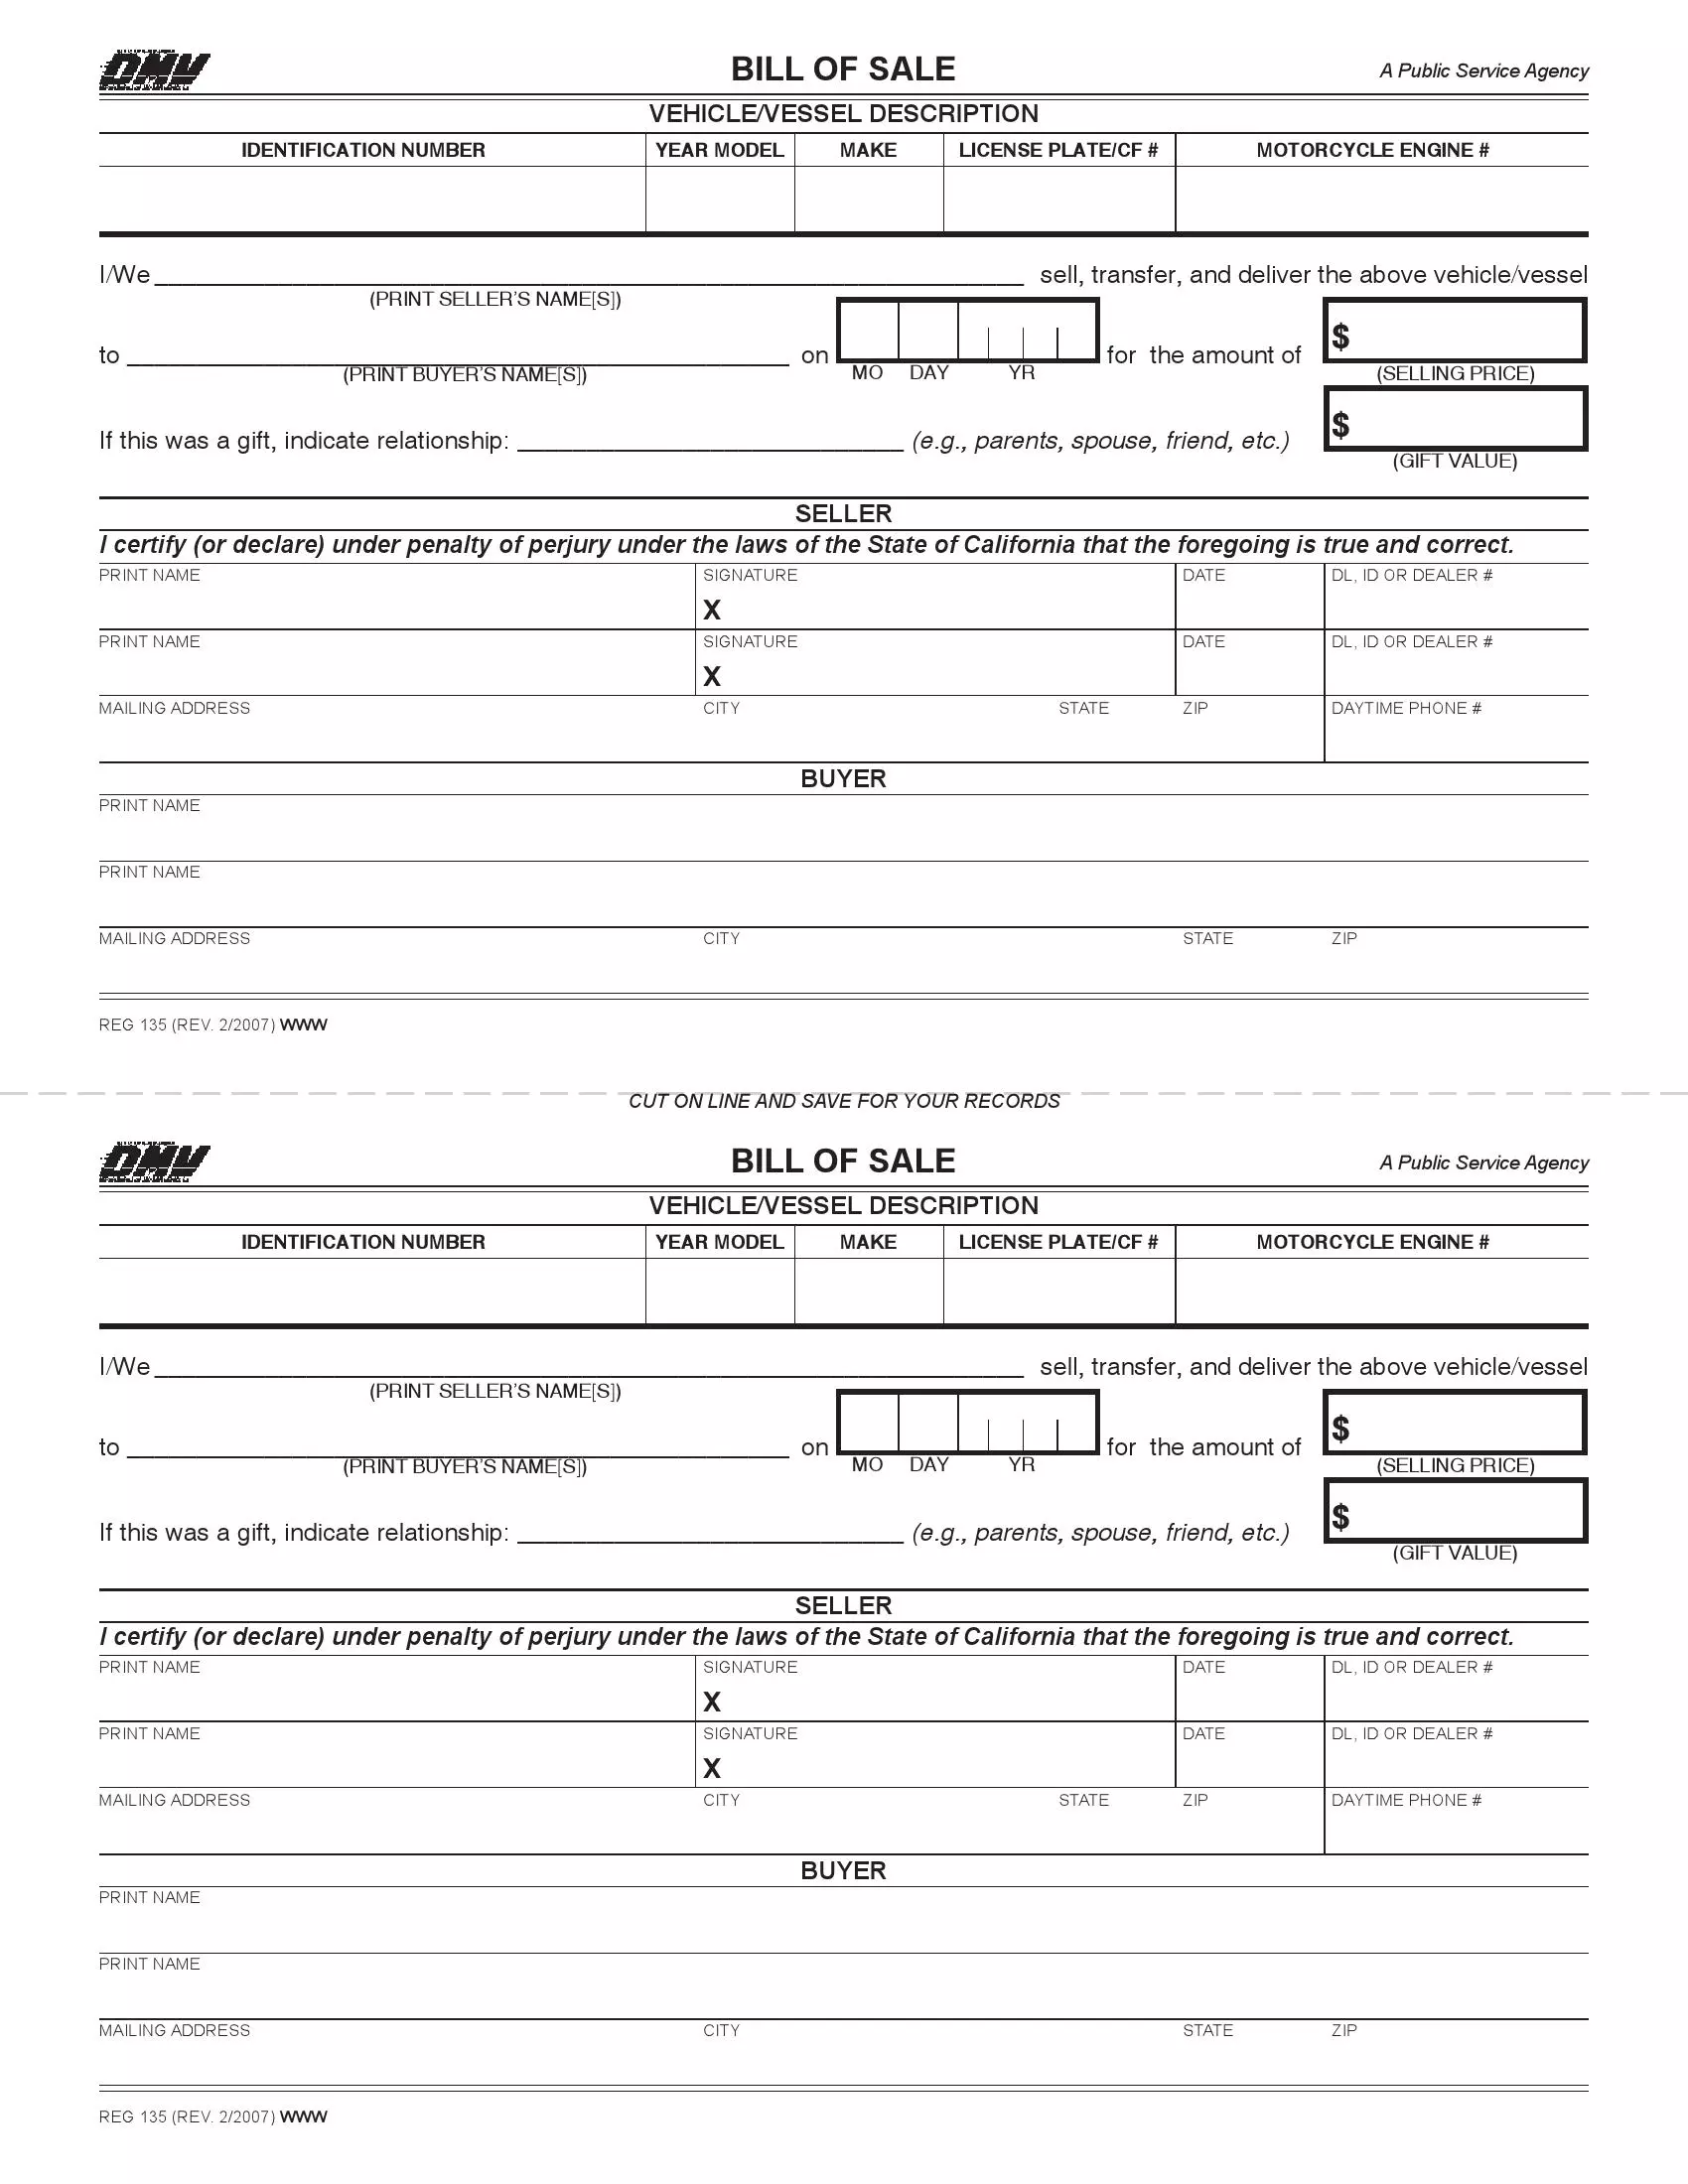 (Vehicle) Form REG 135